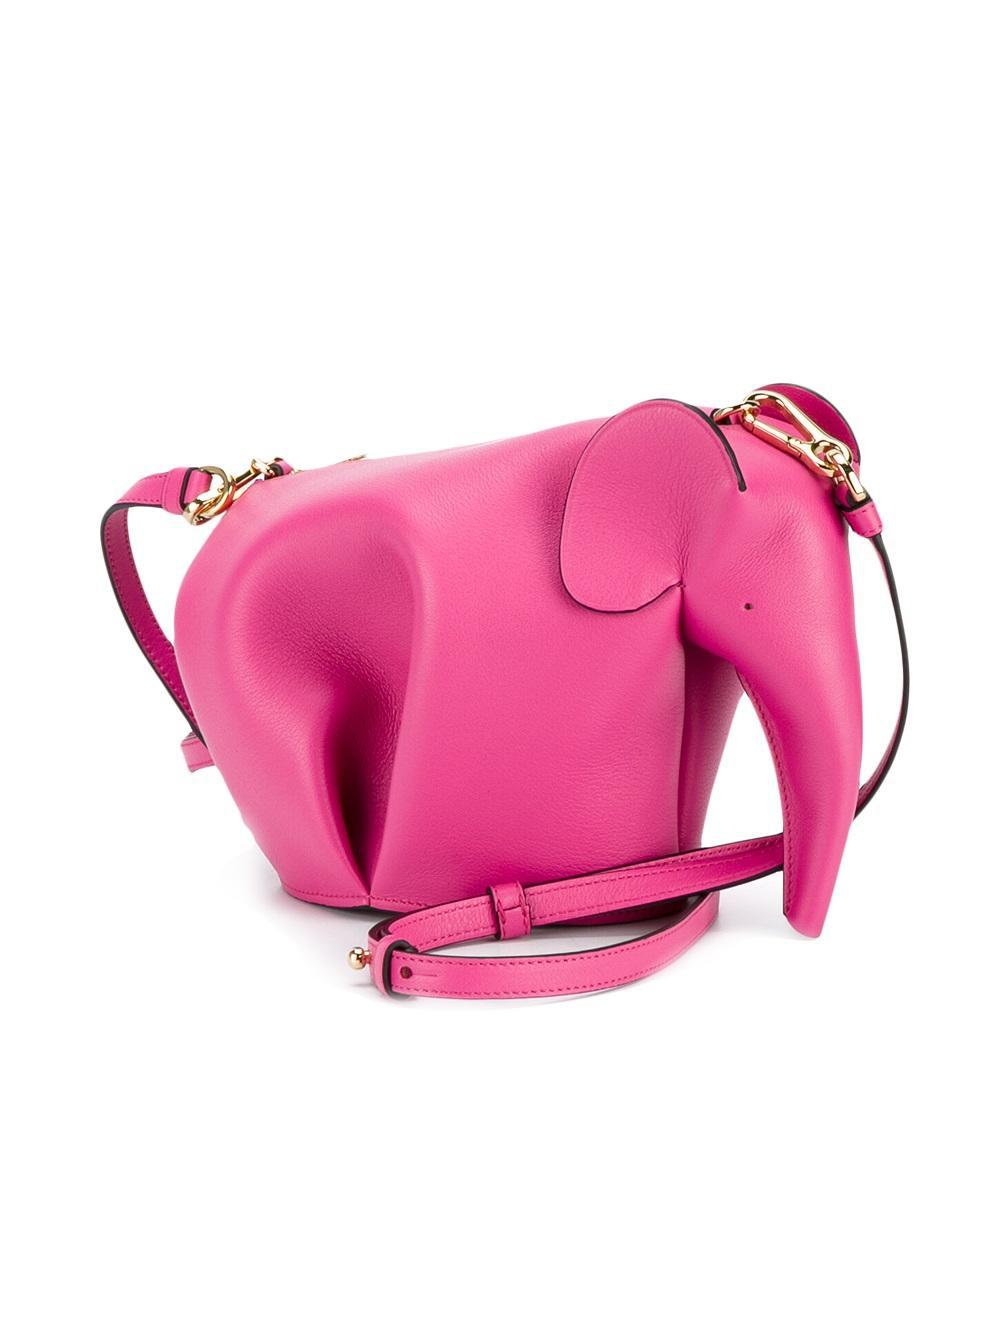 Loewe Leather Elephant Mini Bag in Pink & Purple (Pink) - Lyst